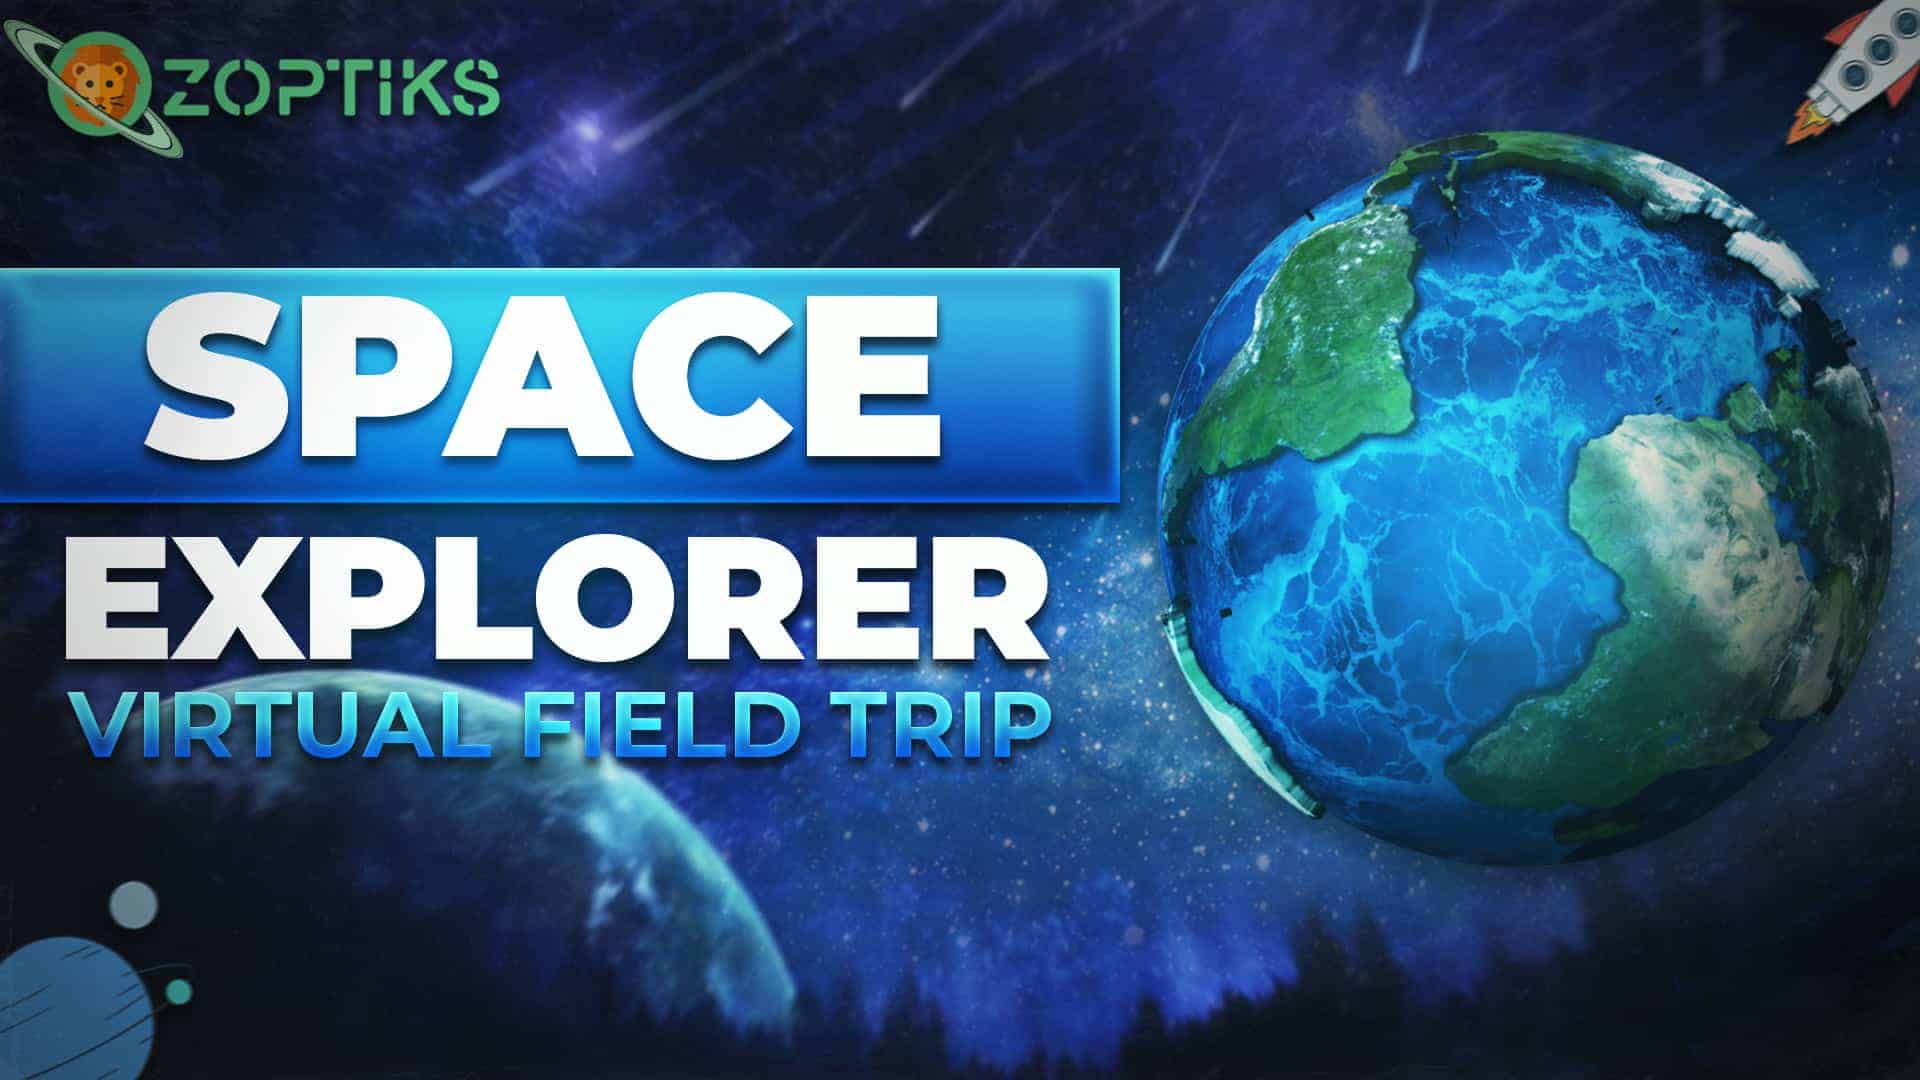 Space explorer virtual field trip